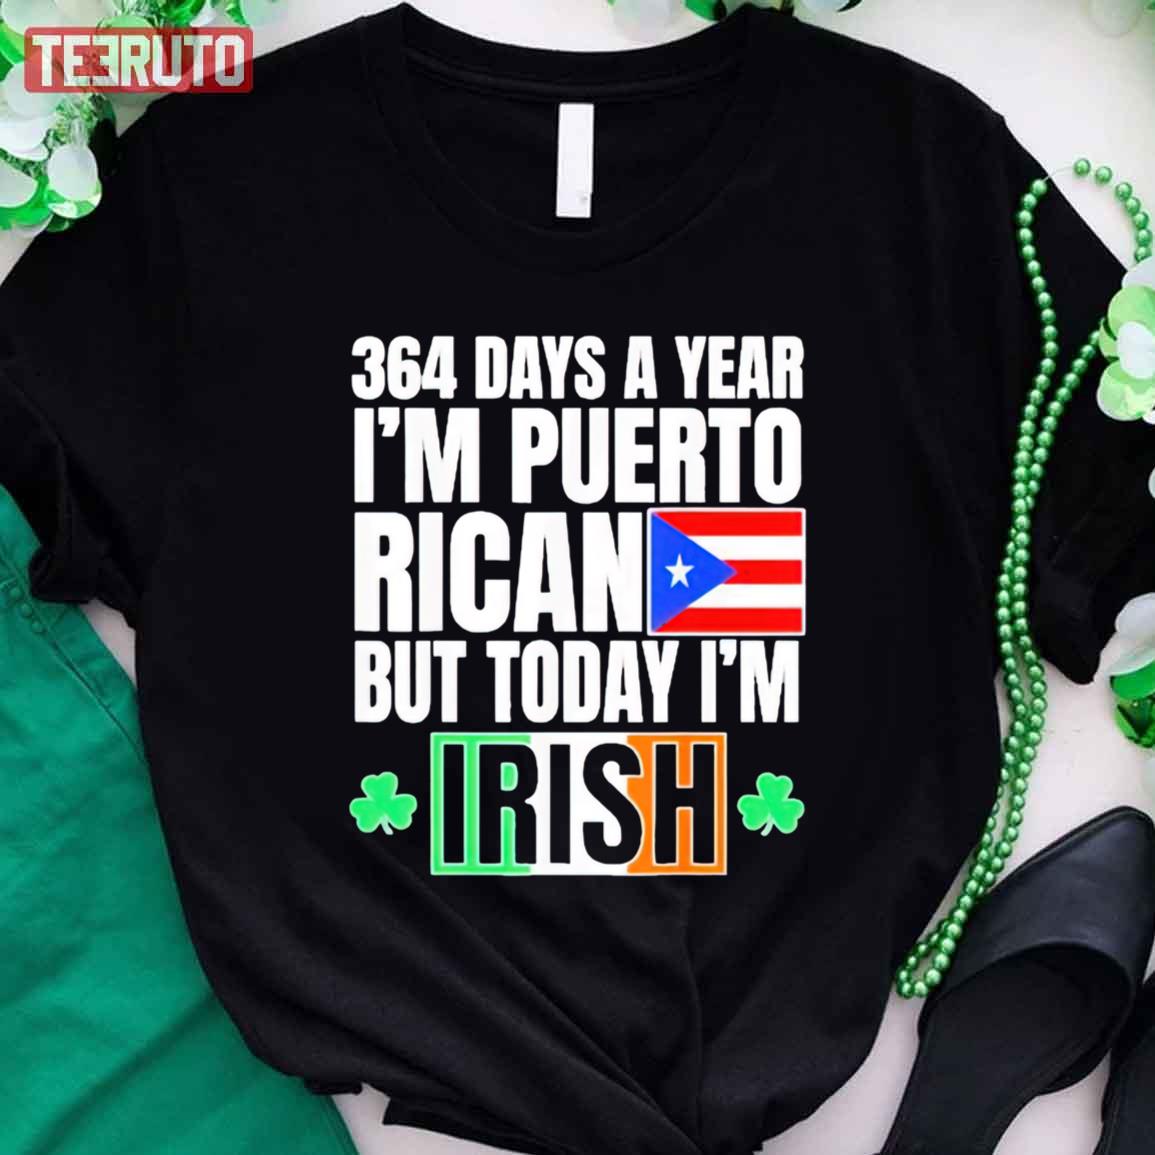 St Paddy's Day T Shirt Shamrock Green T Shirt Patrick's Day T Shirt UNISEX Kiss Me I'm A Paralegal Shirt Funny St